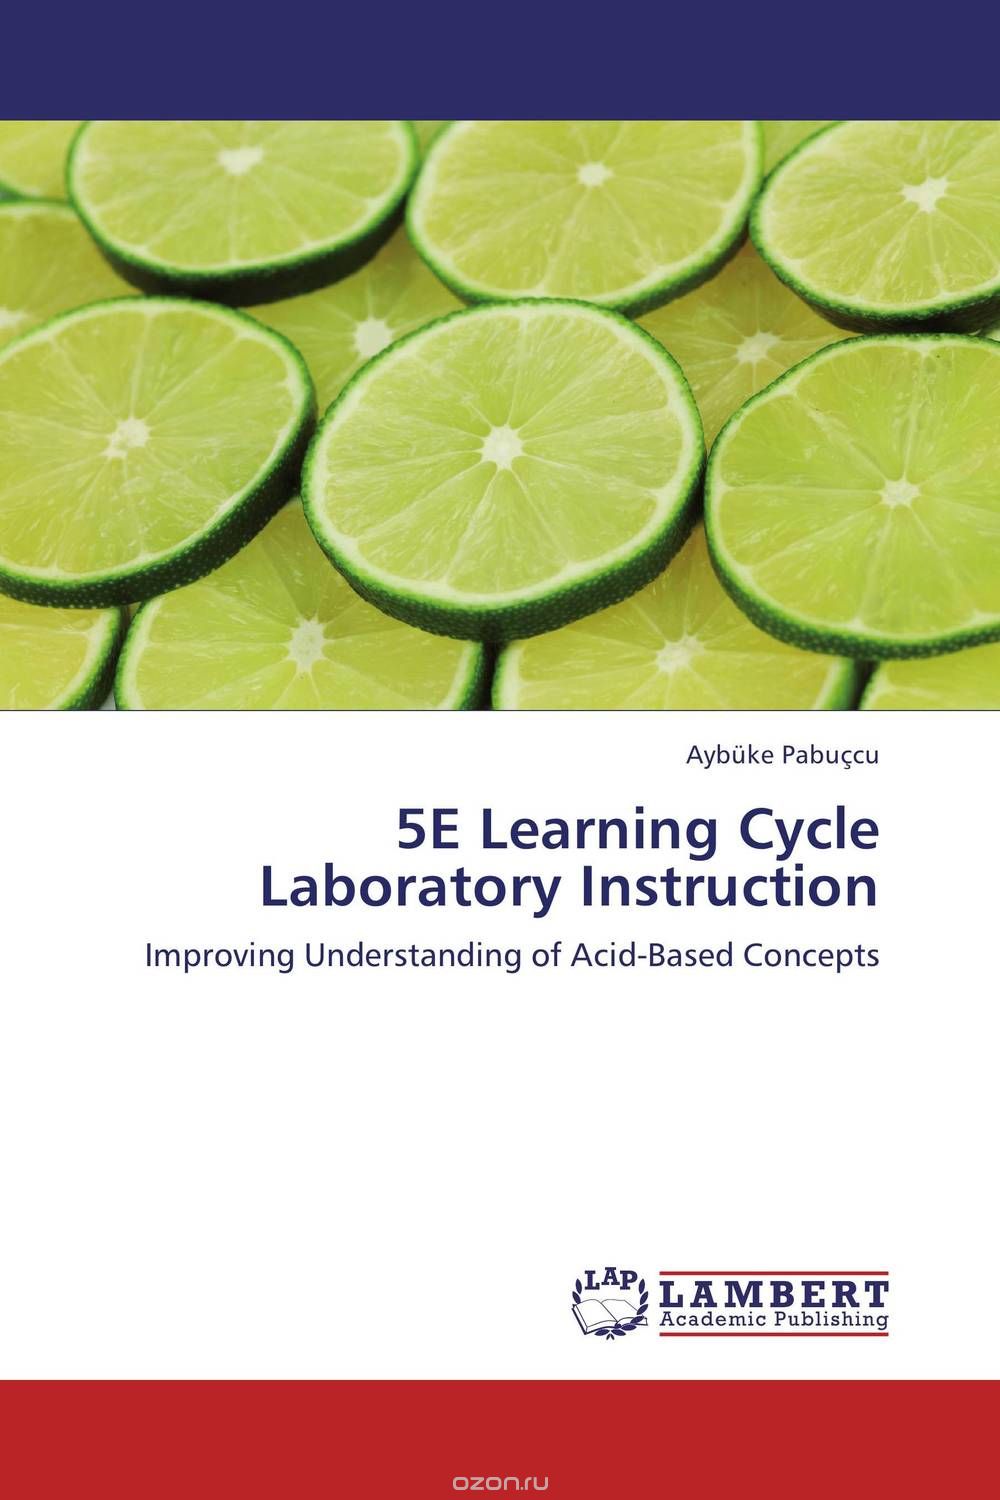 Скачать книгу "5E Learning Cycle Laboratory Instruction"